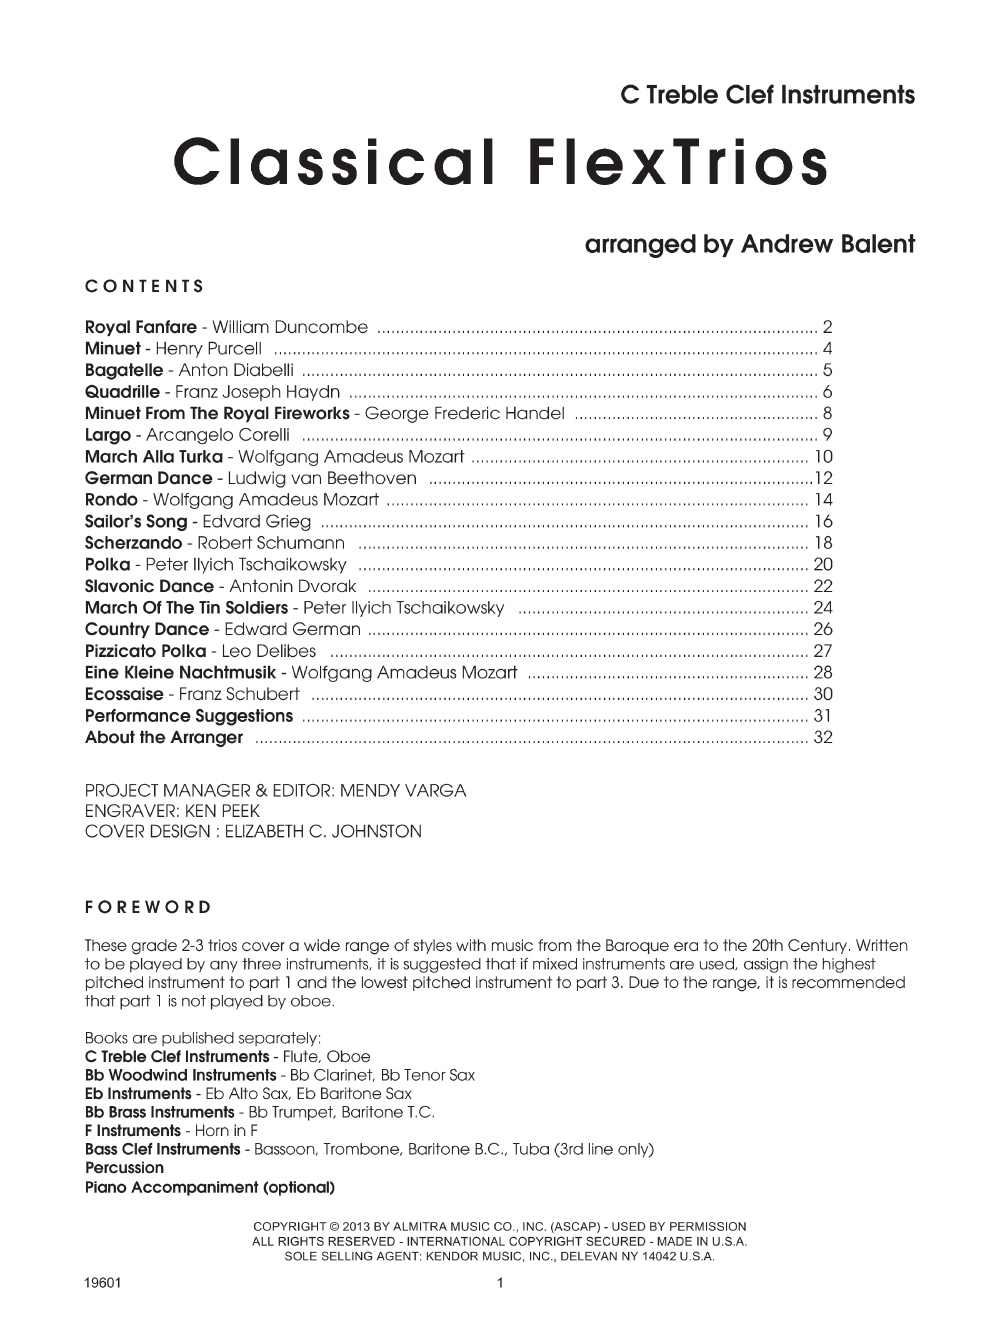 Classical FlexTrios Piano Accompaniment (opt.)